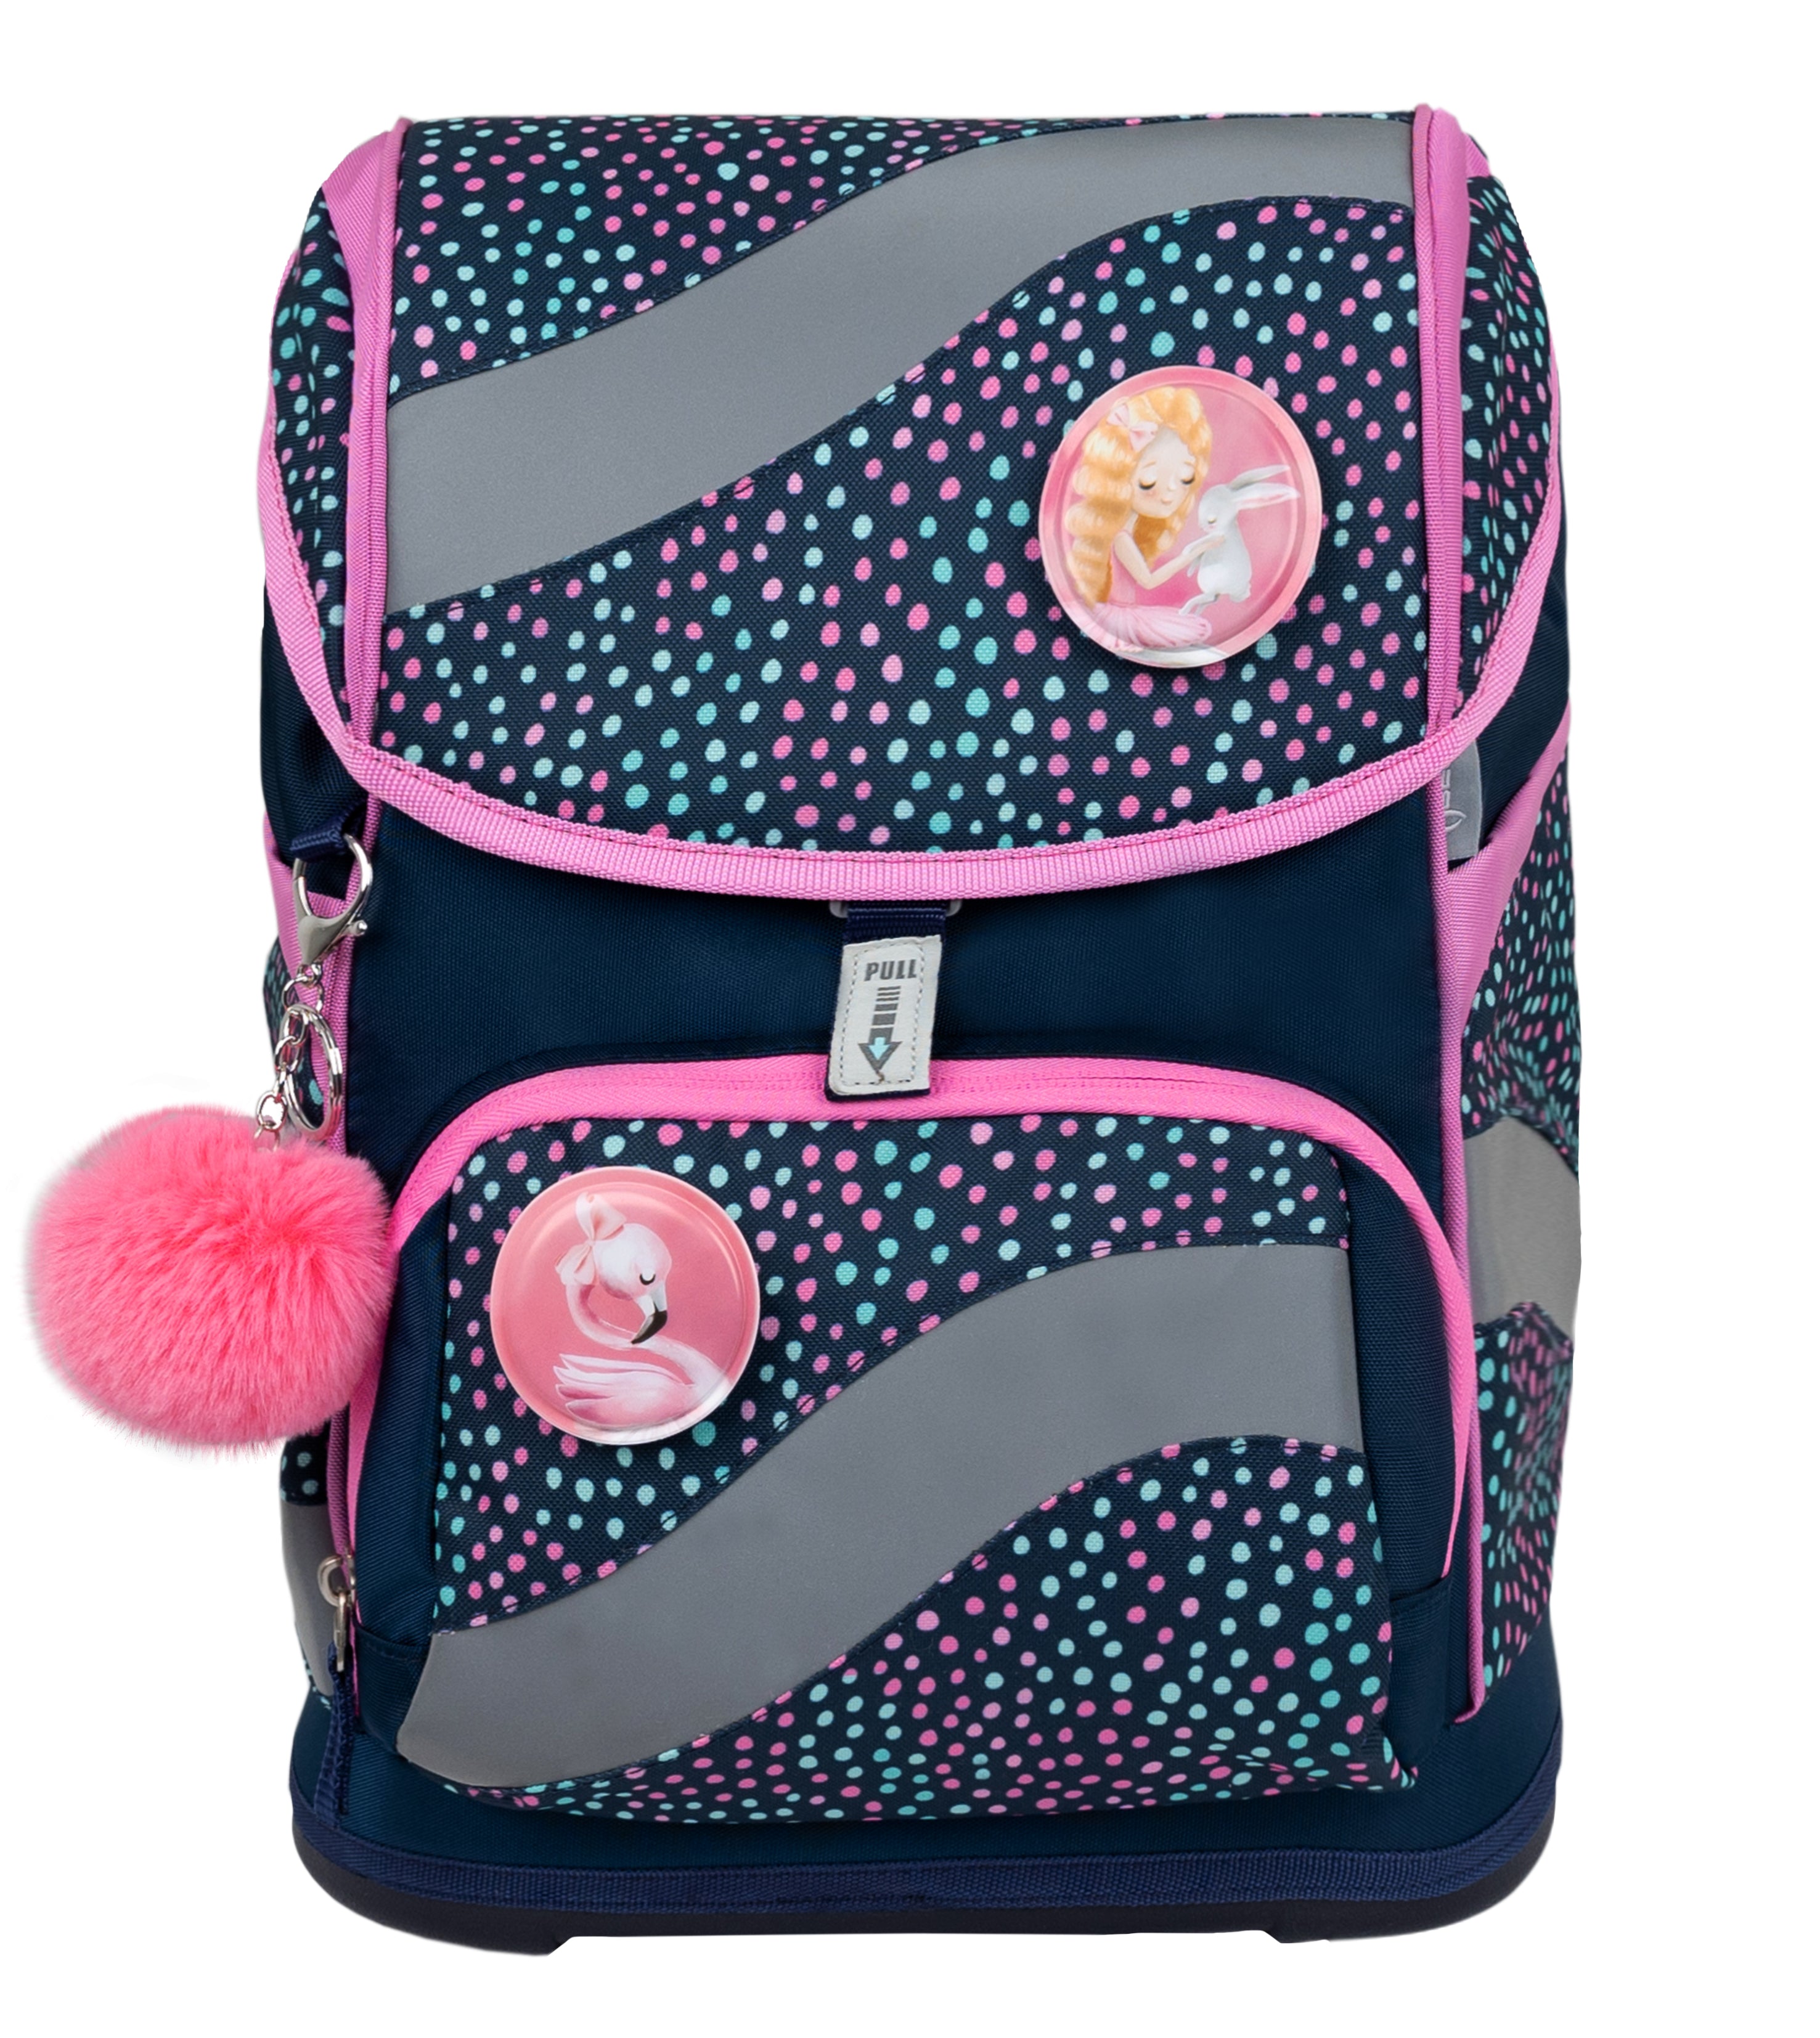 Smarty Amazing Polka Dot 2 schoolbag set 5 pcs